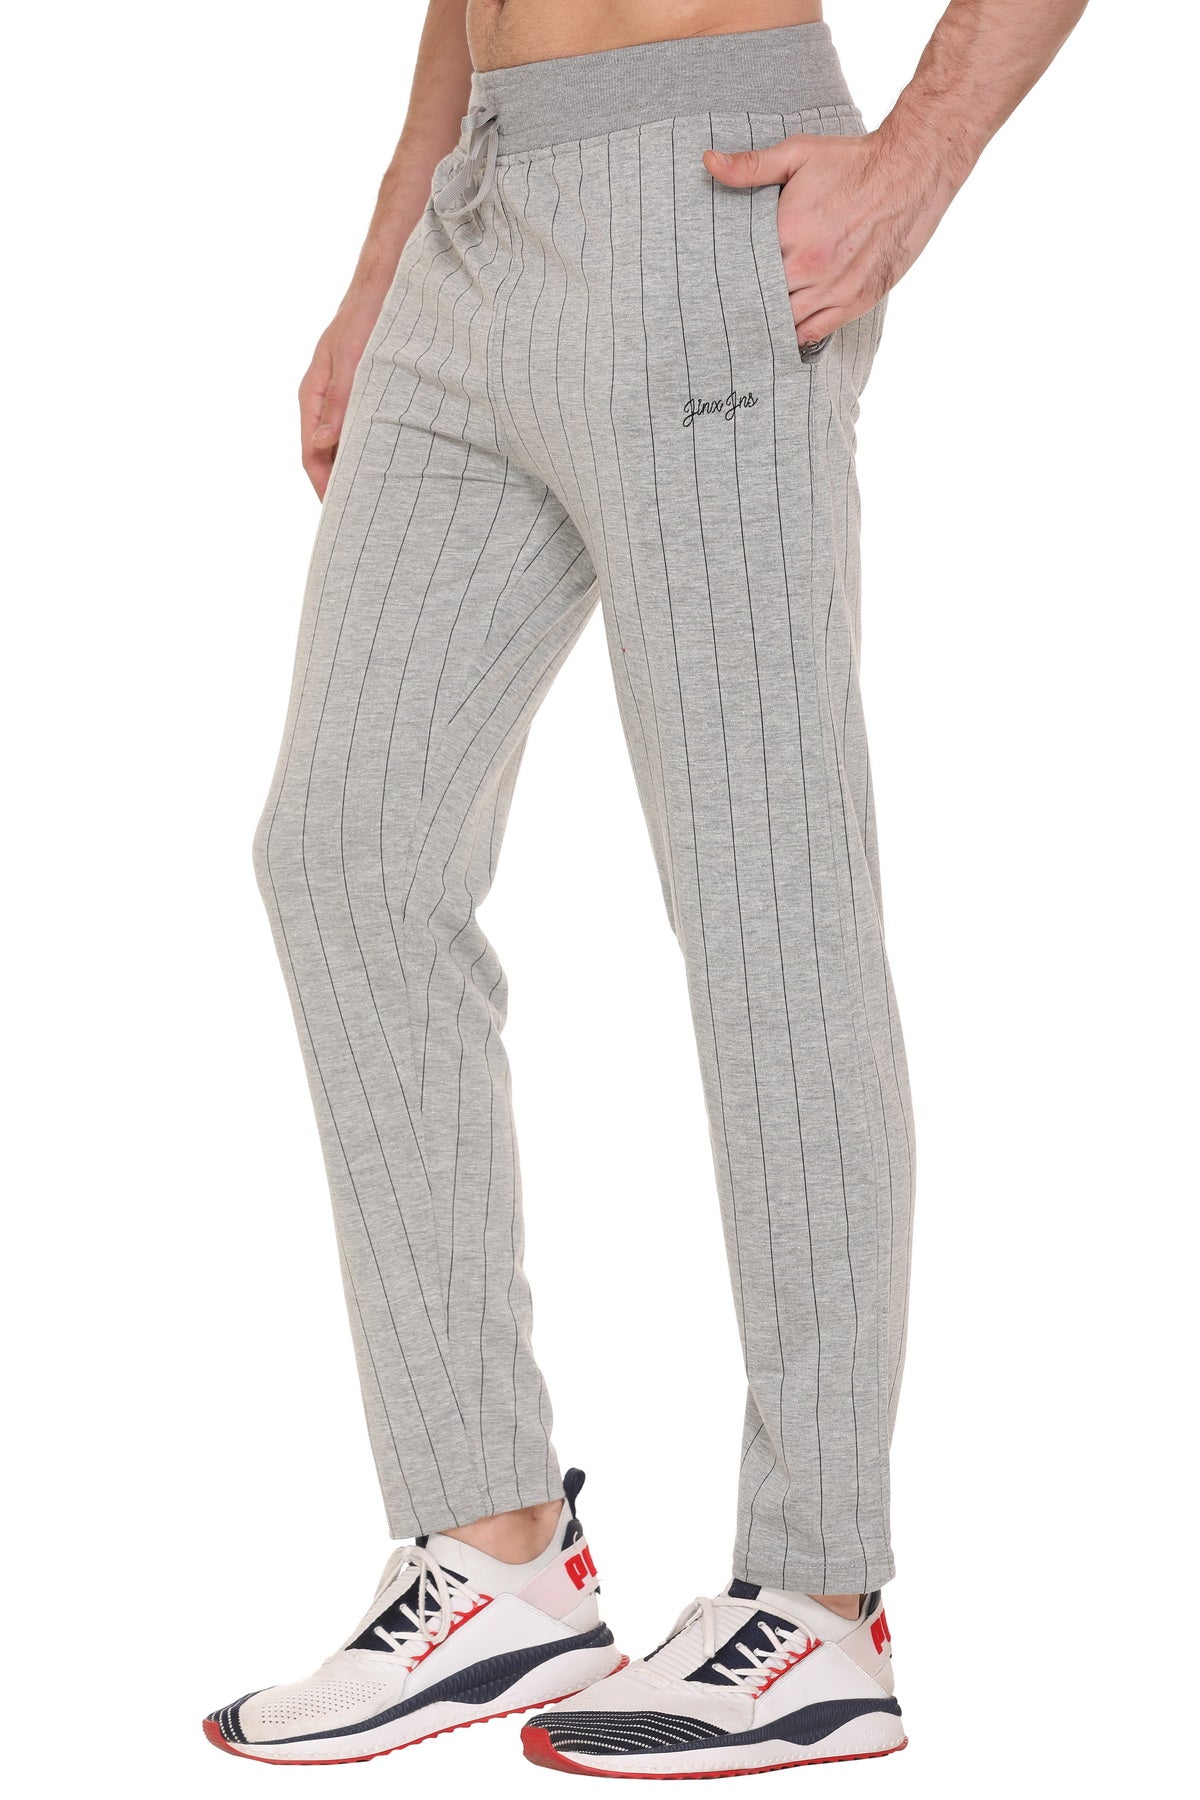 HARVEY MILLER POLO CLUB Men's Pajama Pants Cotton Pajama Pants HRM4500 Black